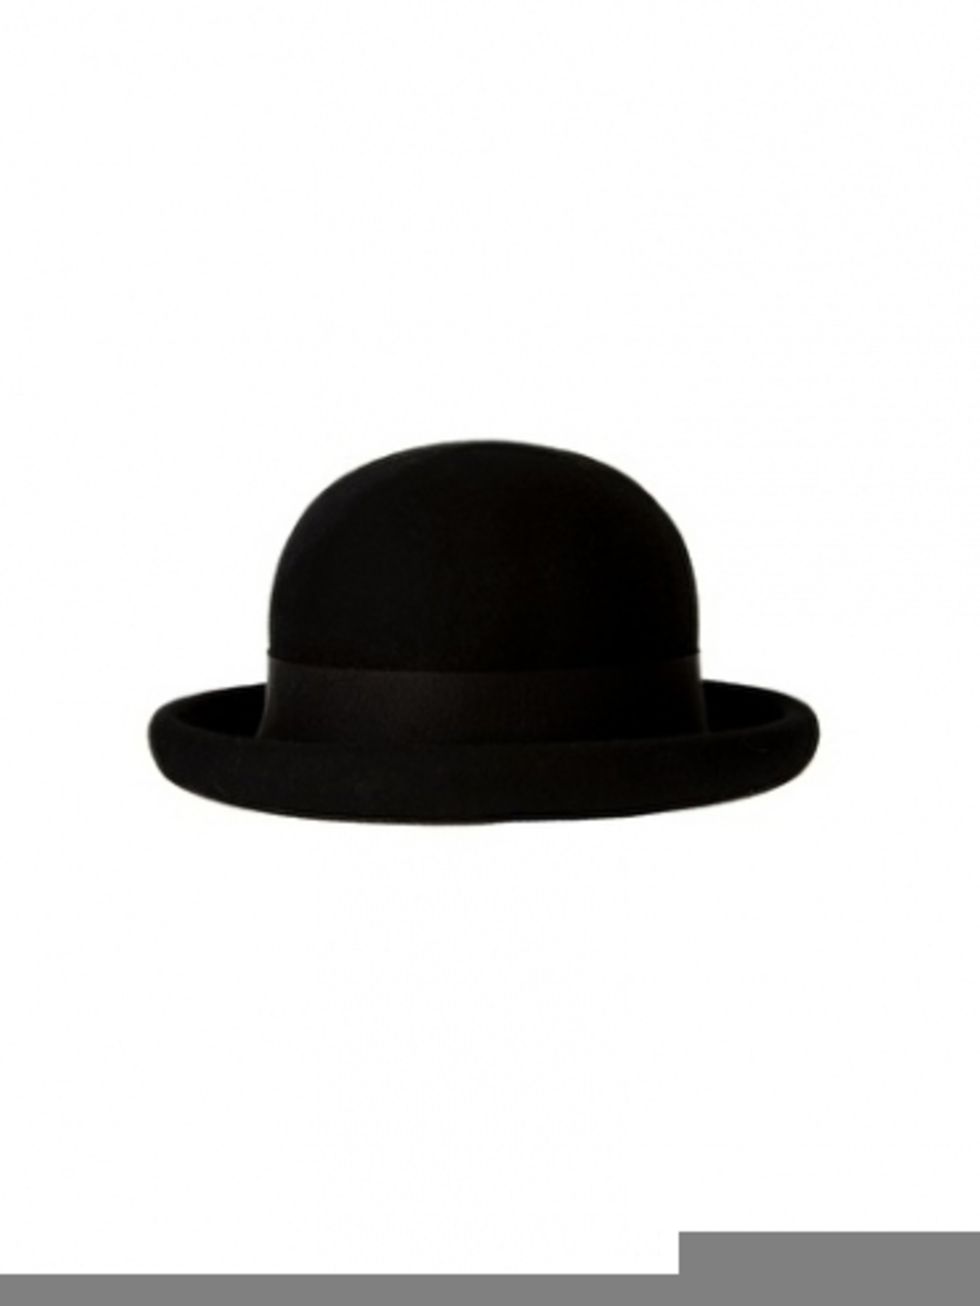 Hat, Brown, Style, Headgear, Costume accessory, Black, Beige, Costume hat, Maroon, Fedora, 